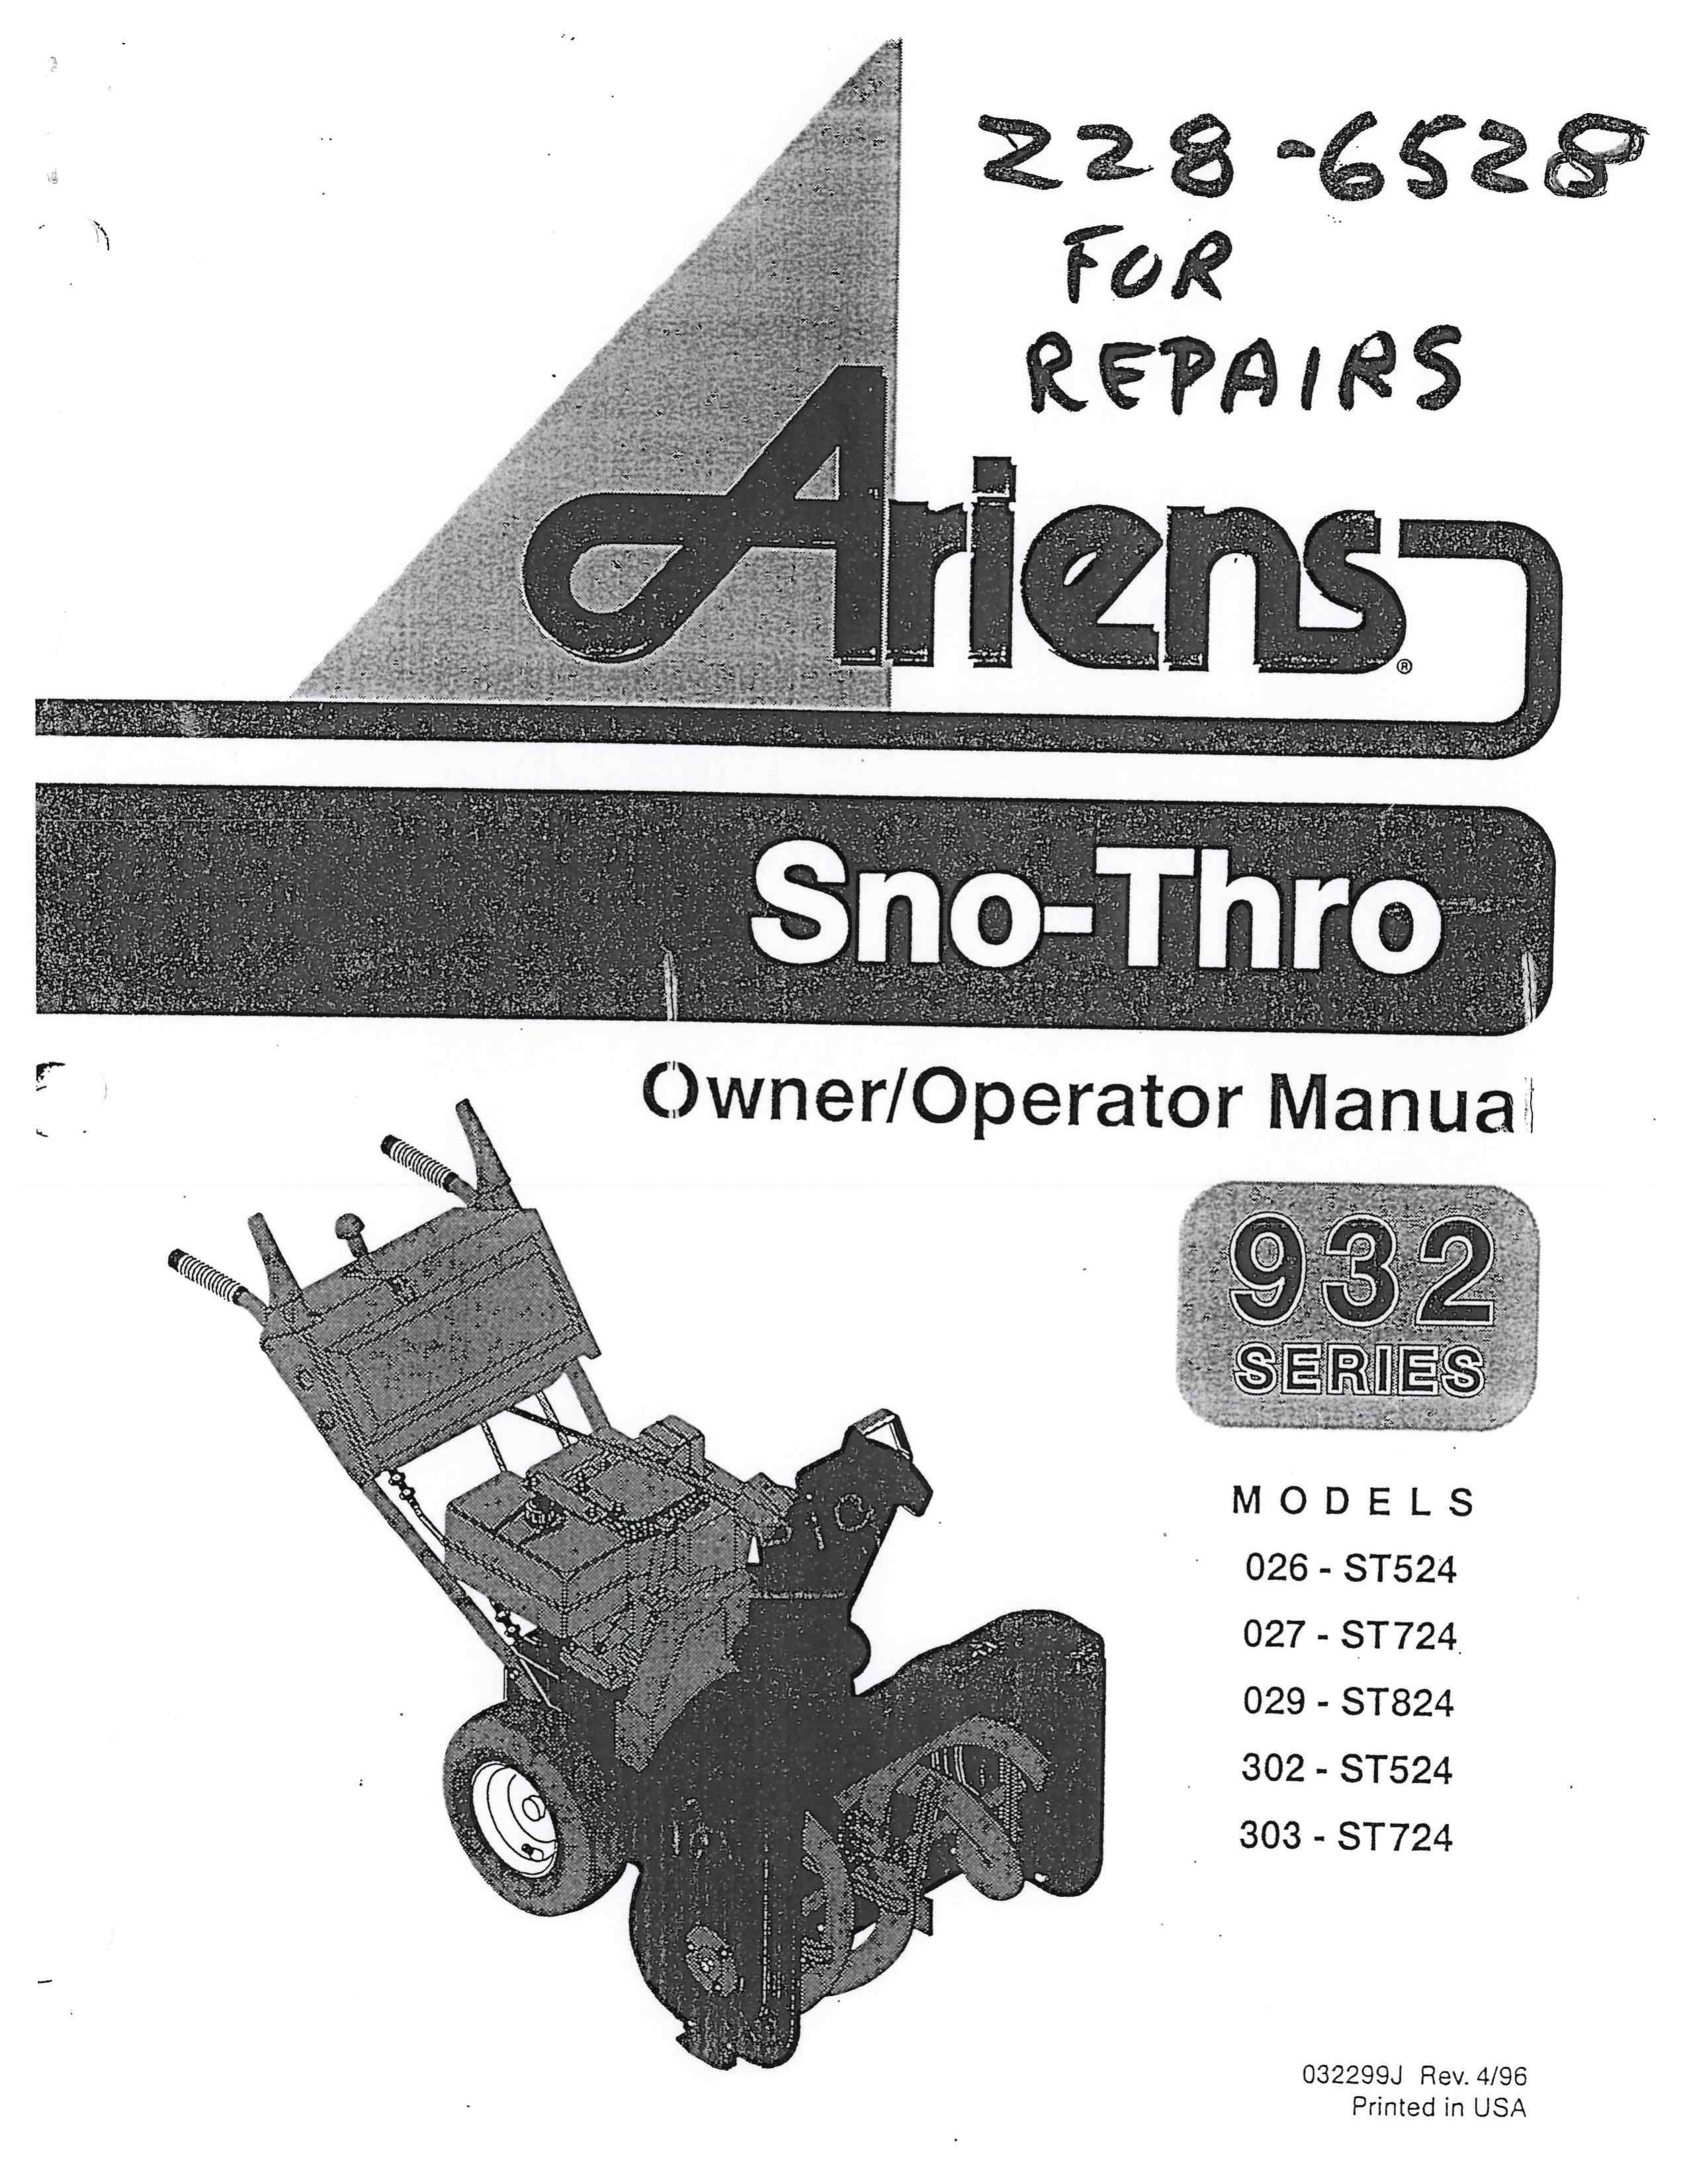 Ariens 029-ST824 Snow Blower User Manual